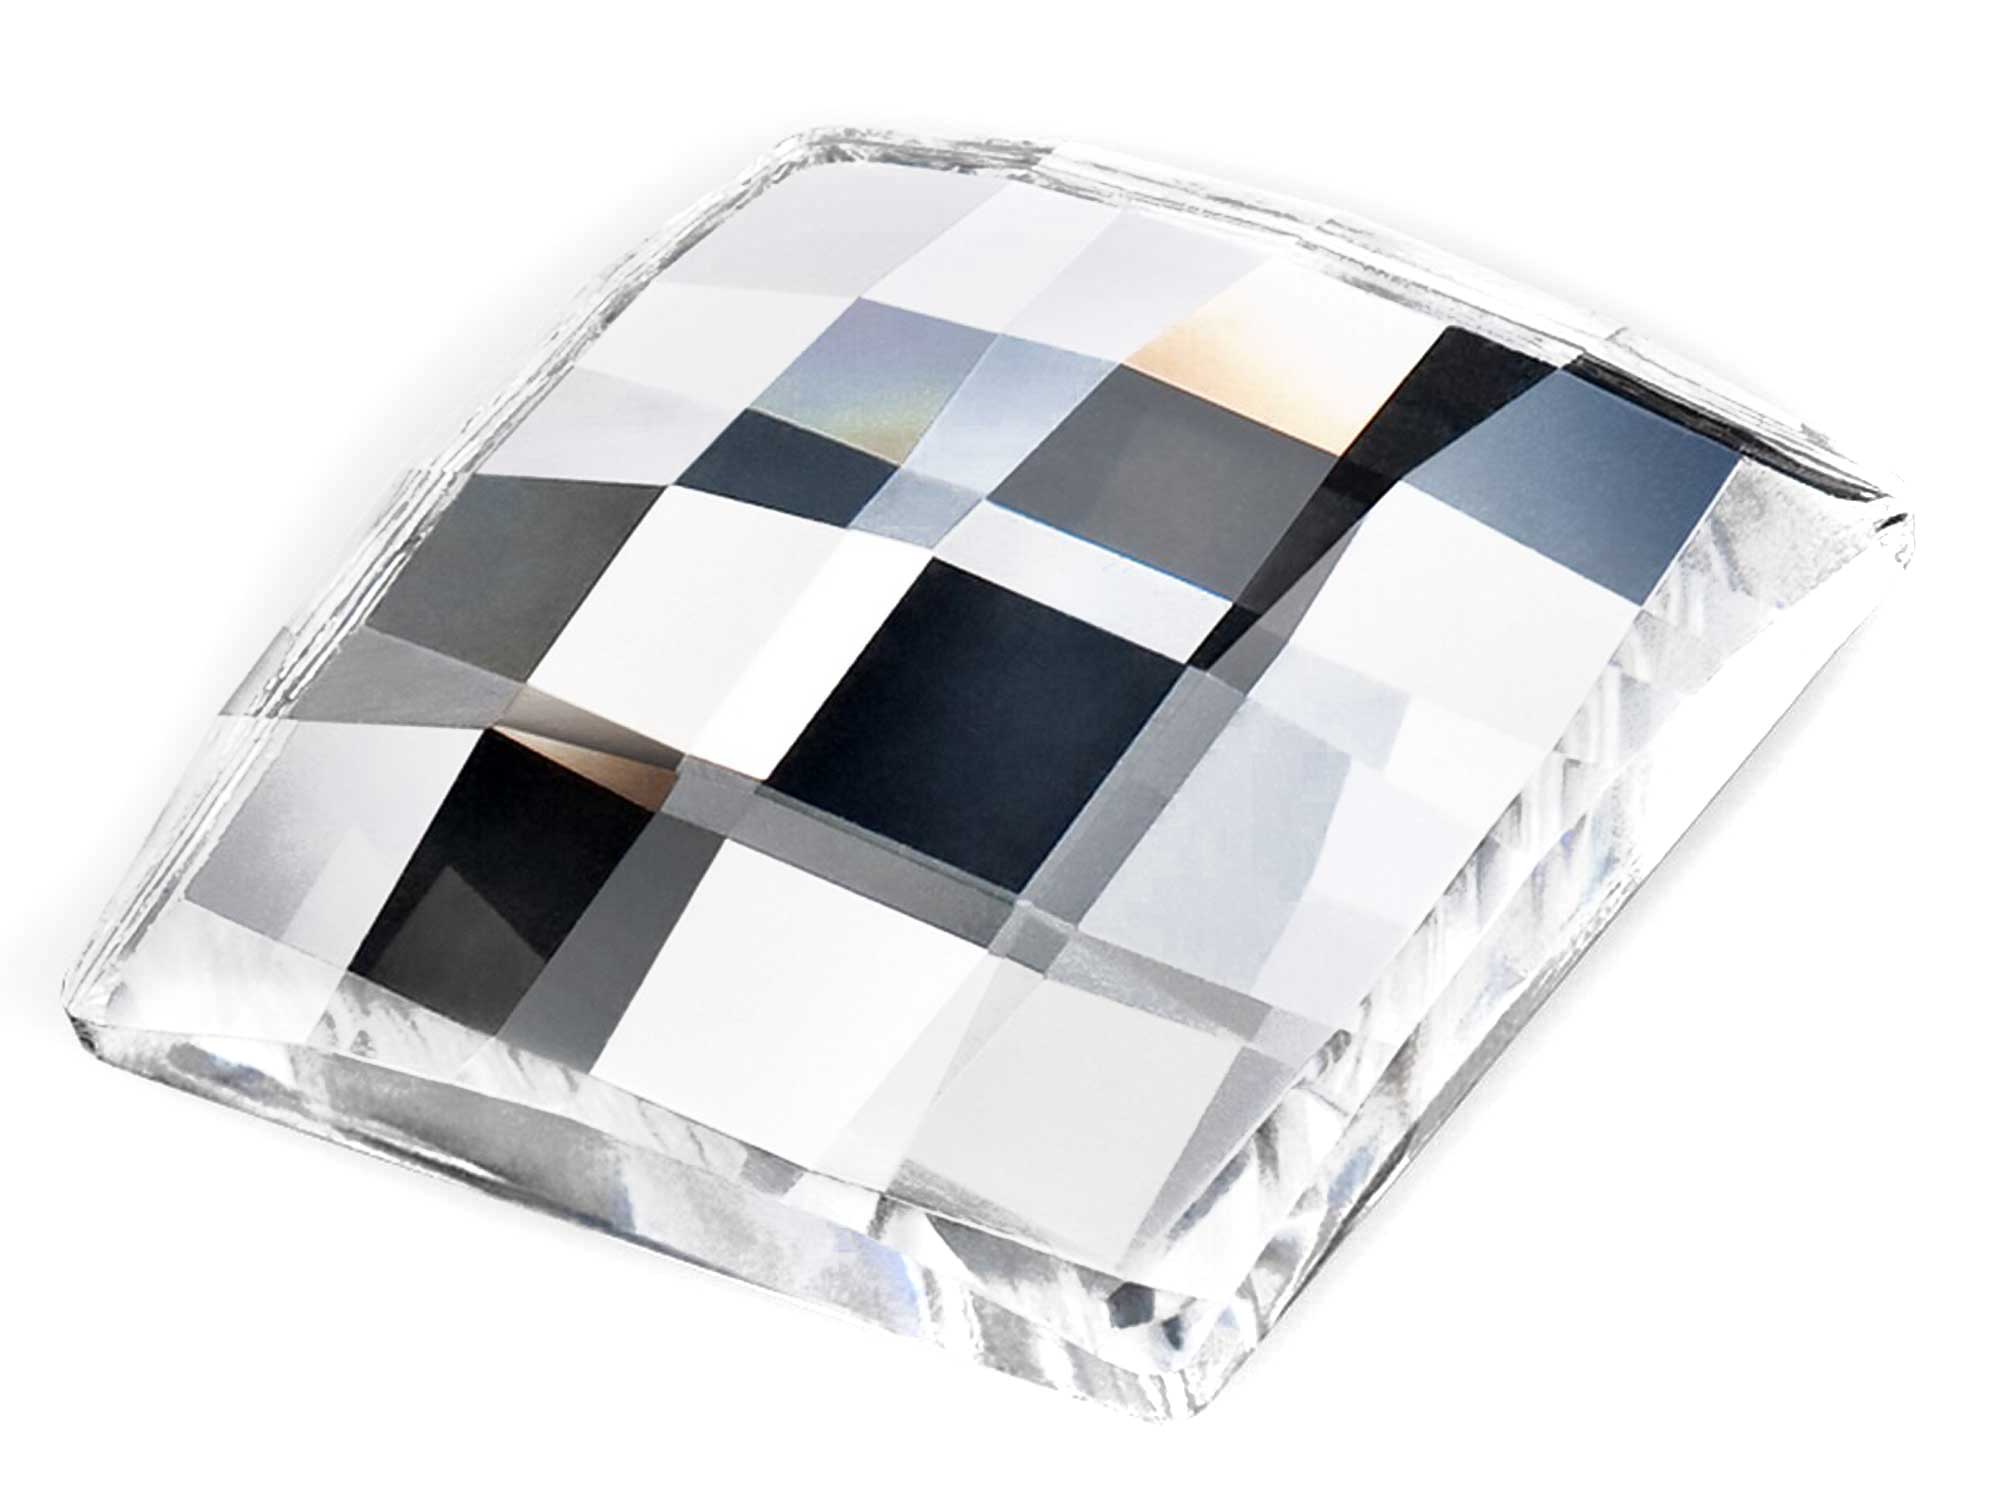 Crystal , Preciosa Czech MC Chessboard SQUARE Maxima Flatback Stones Style #438-23-301 Silver Foiled, sizes 8x8mm, 10x10mm, 12x12mm, 12 pieces